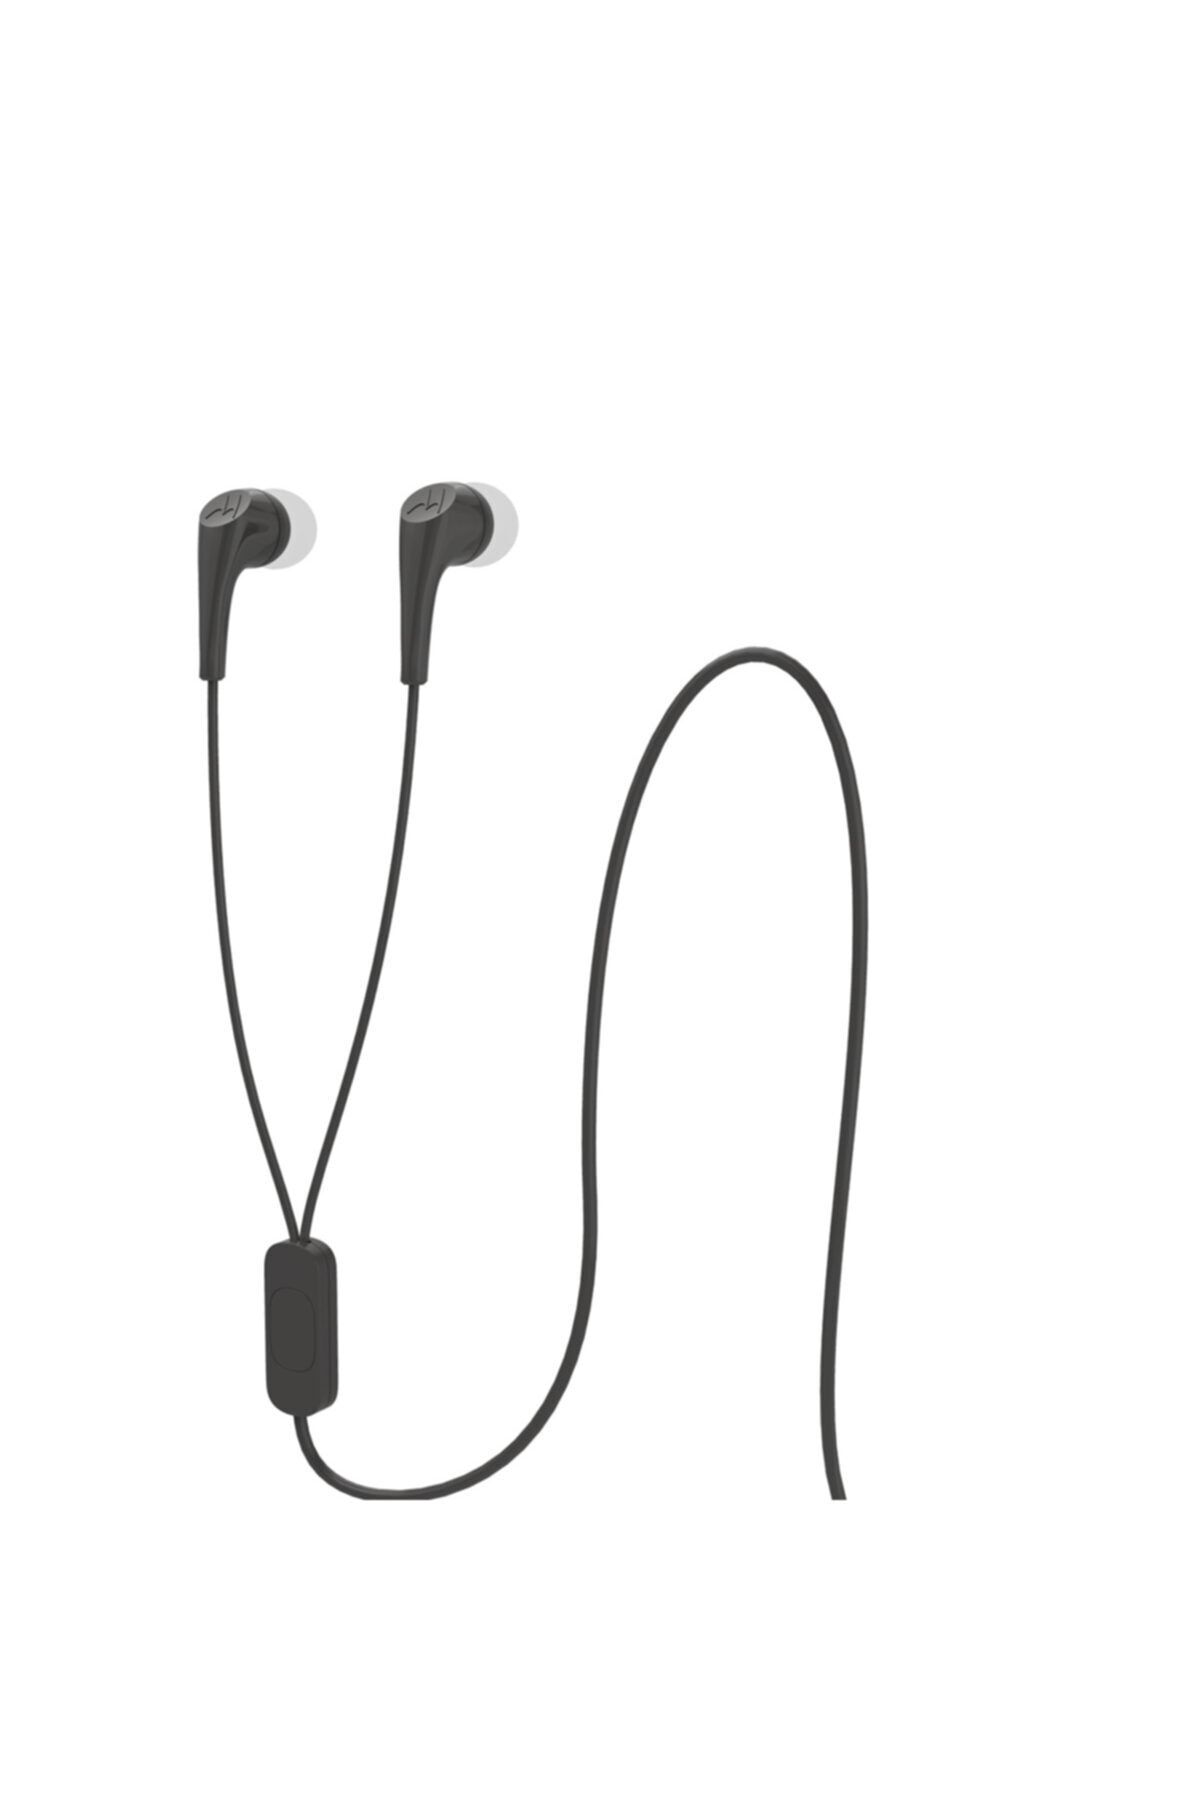 Motorola Earbuds 2 Siyah Mikrofonlu Kablolu Kulakiçi Kulaklık